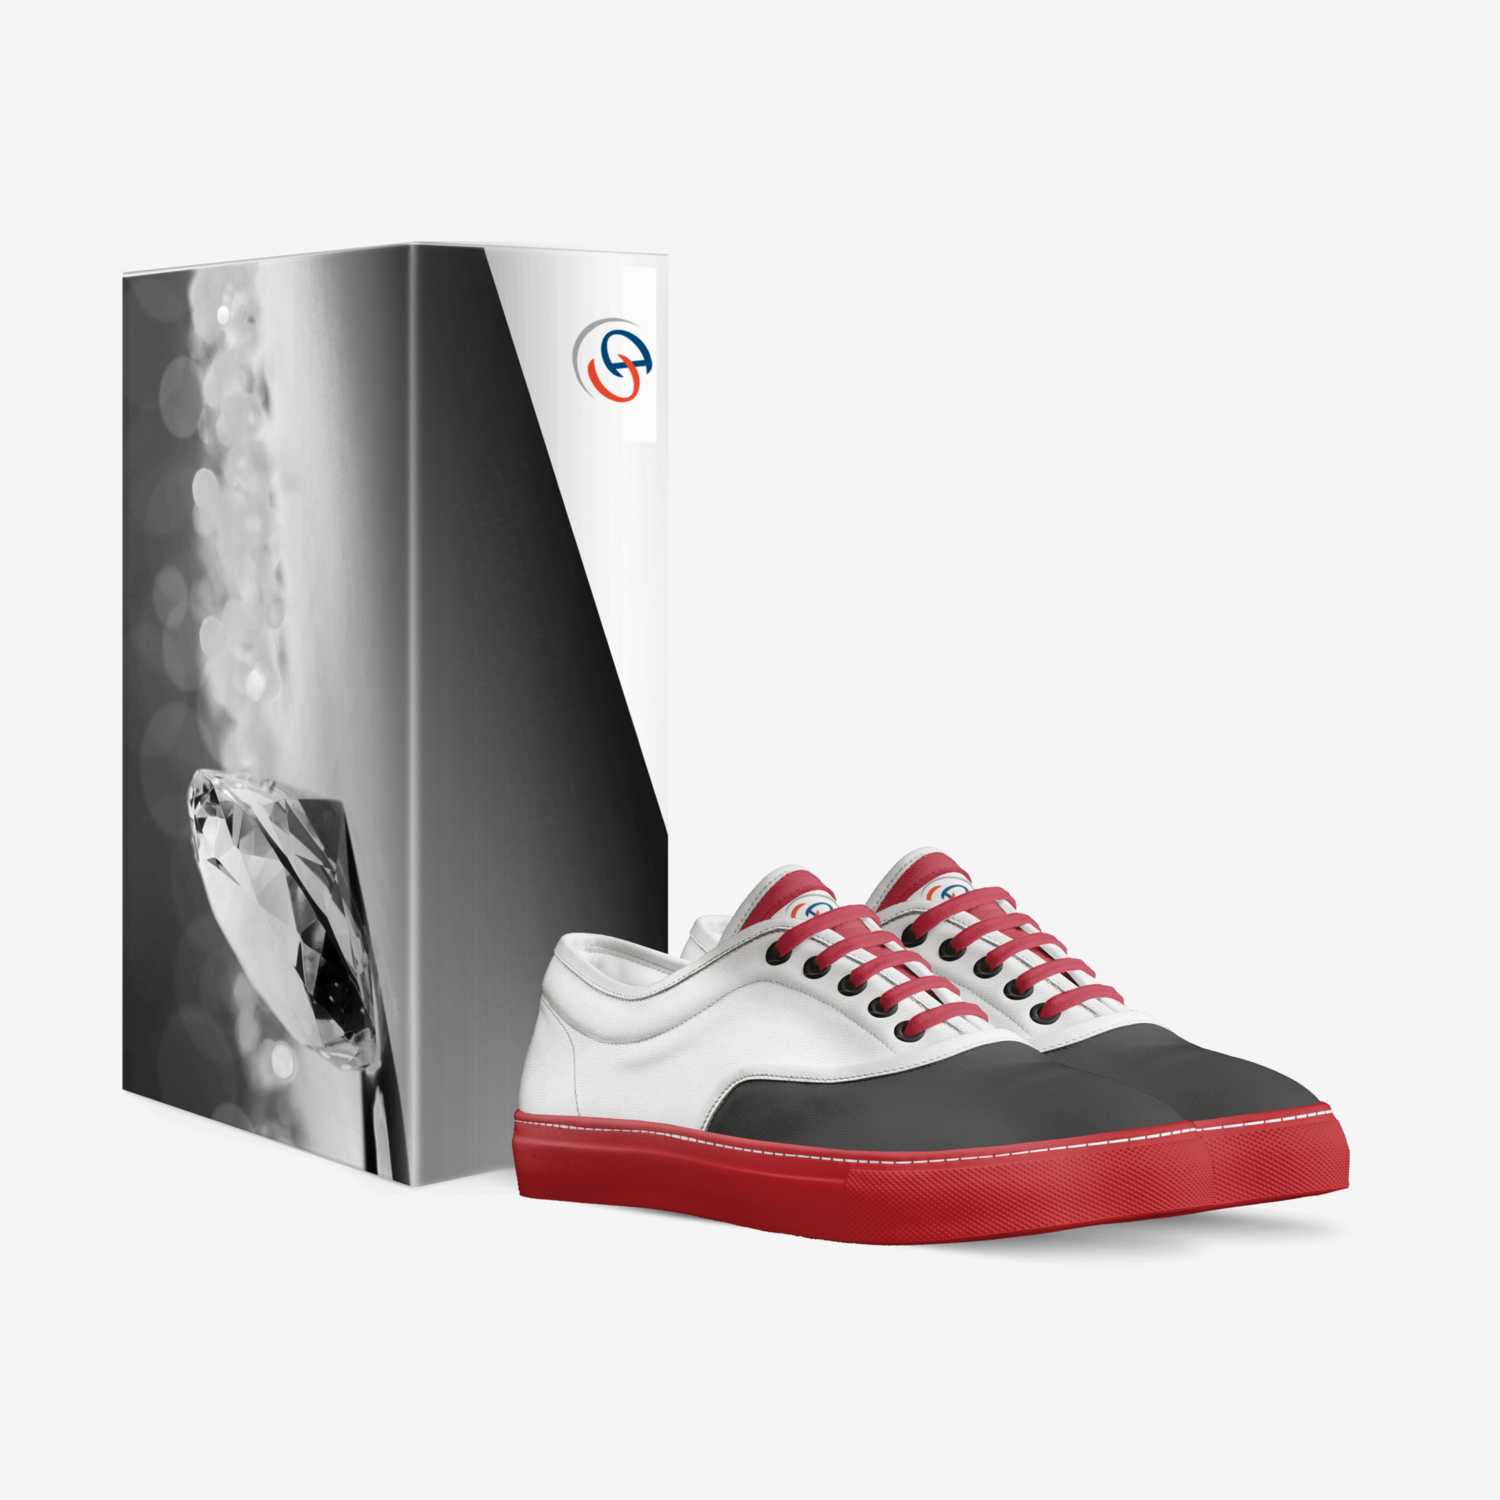 Di Trop Drop custom made in Italy shoes by Cj Dillard | Box view